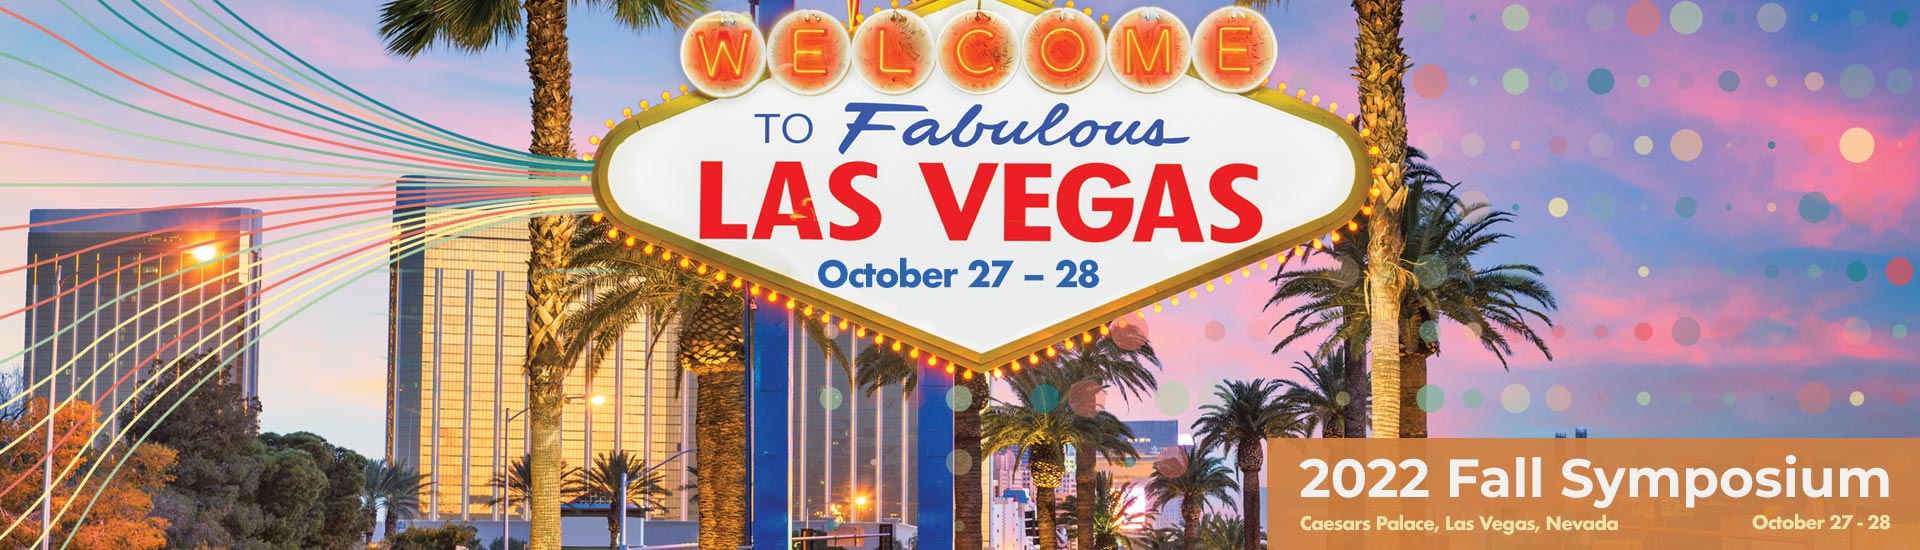 Fall Symposium • Las Vegas, Nevada • October 27-28